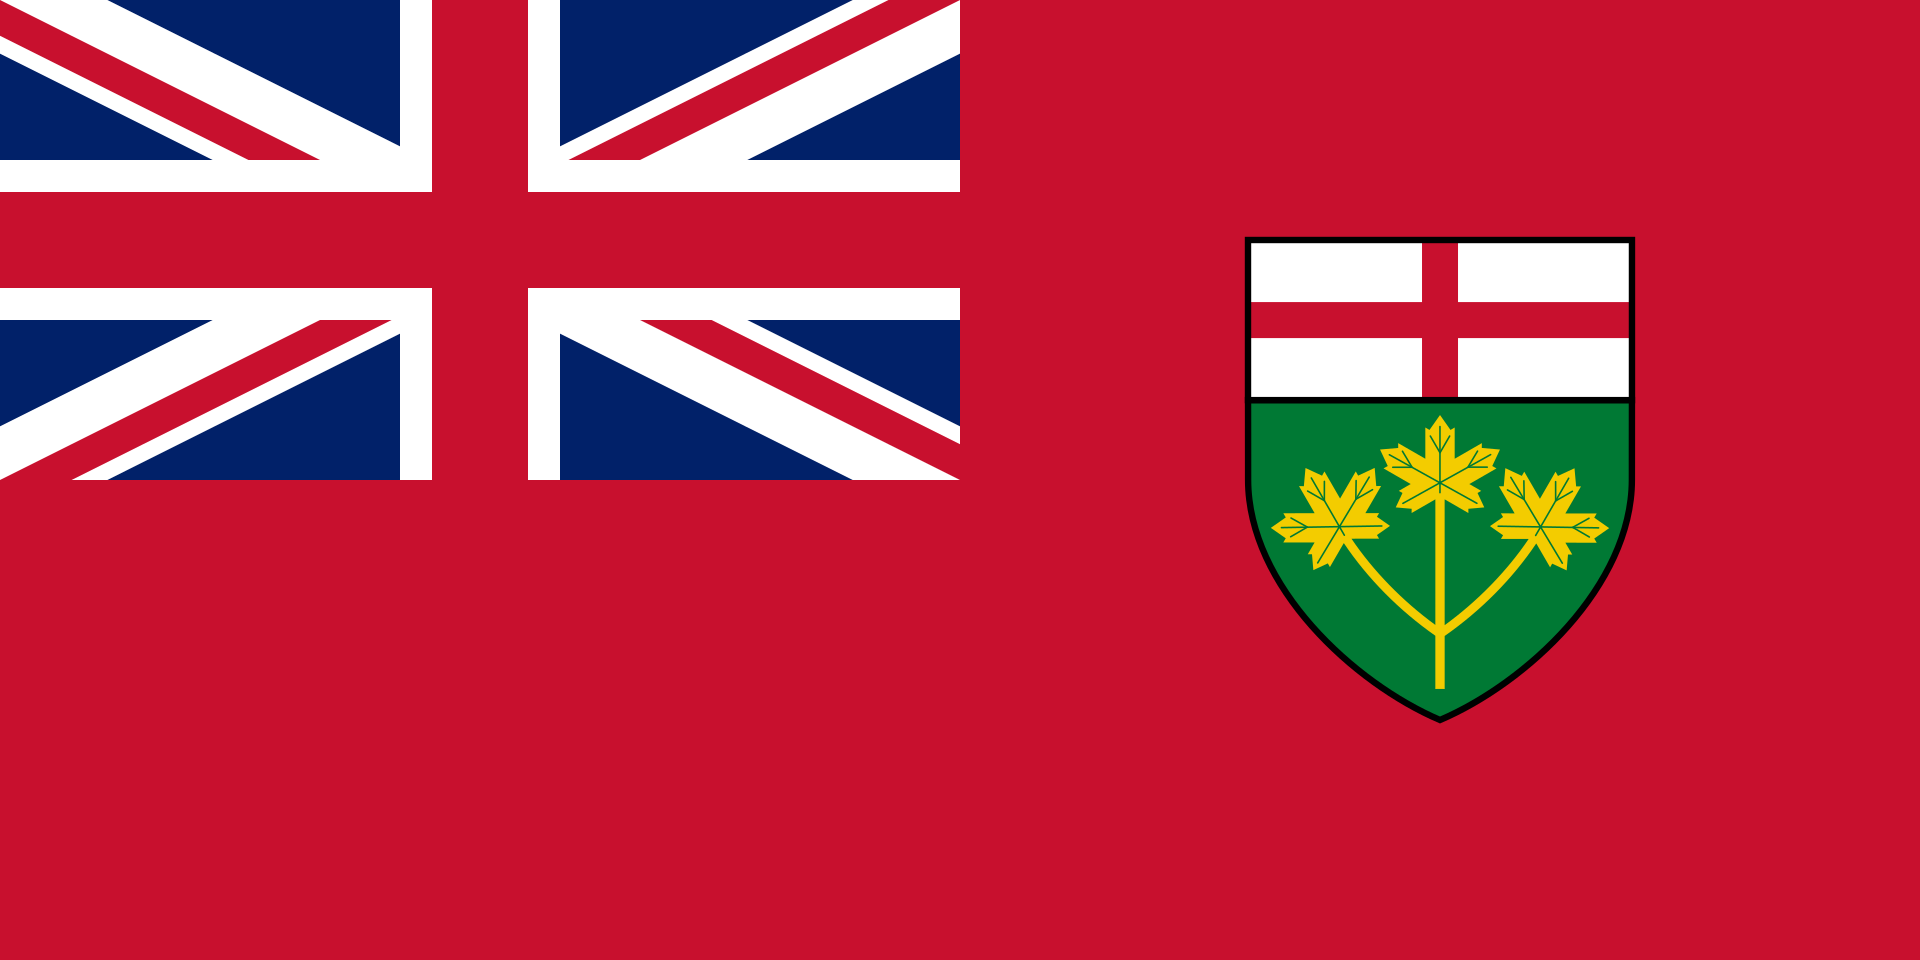 Ontario Corporation Registration